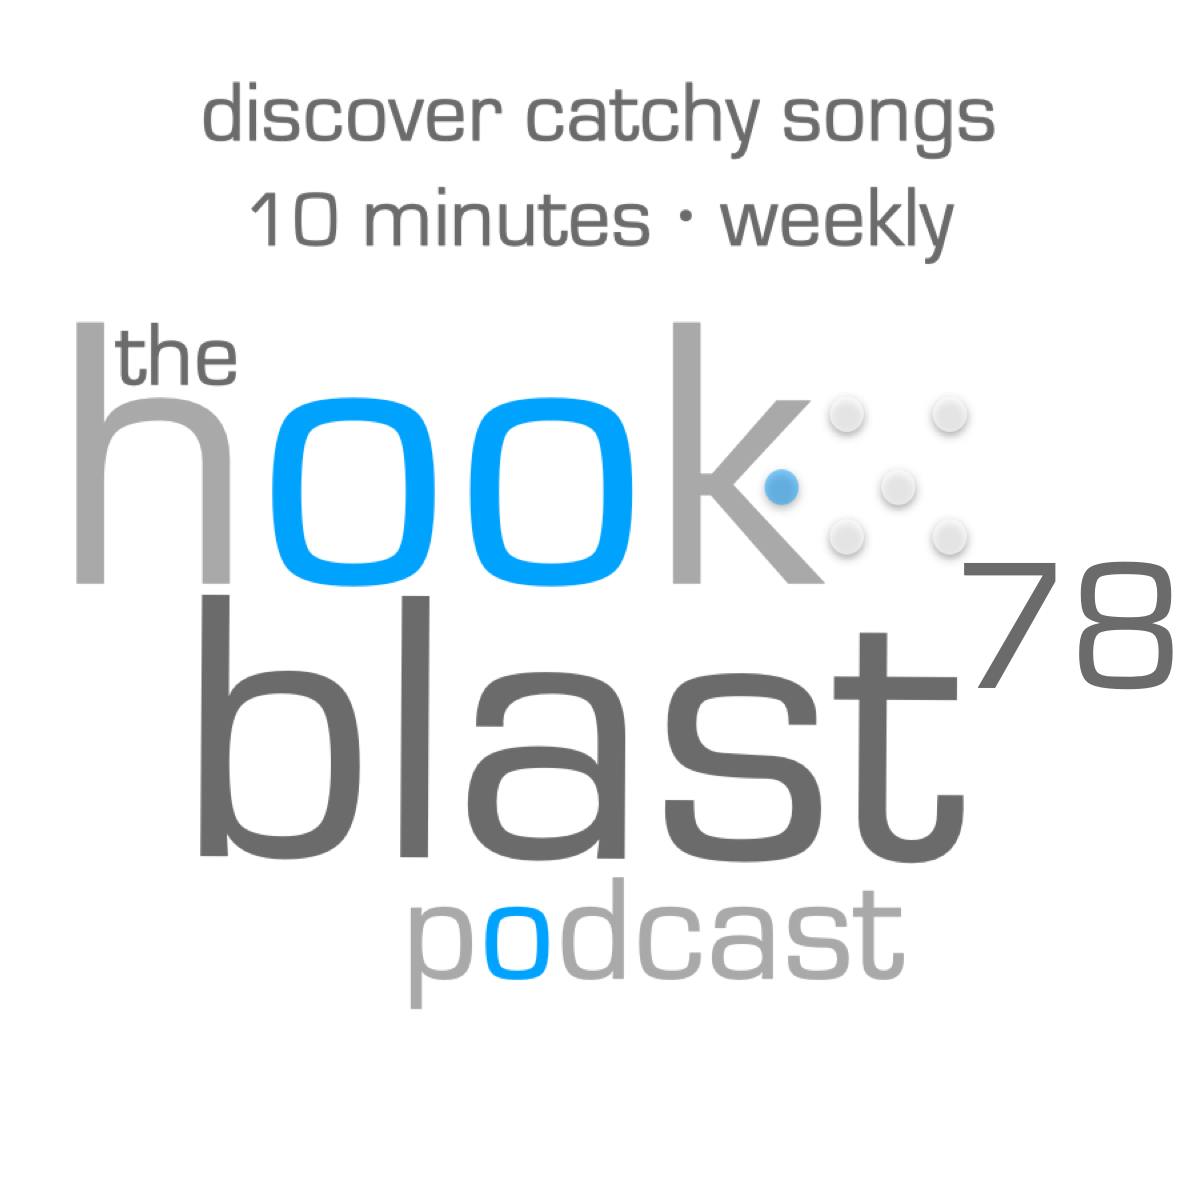 The Hookblast Podcast - Episode 78